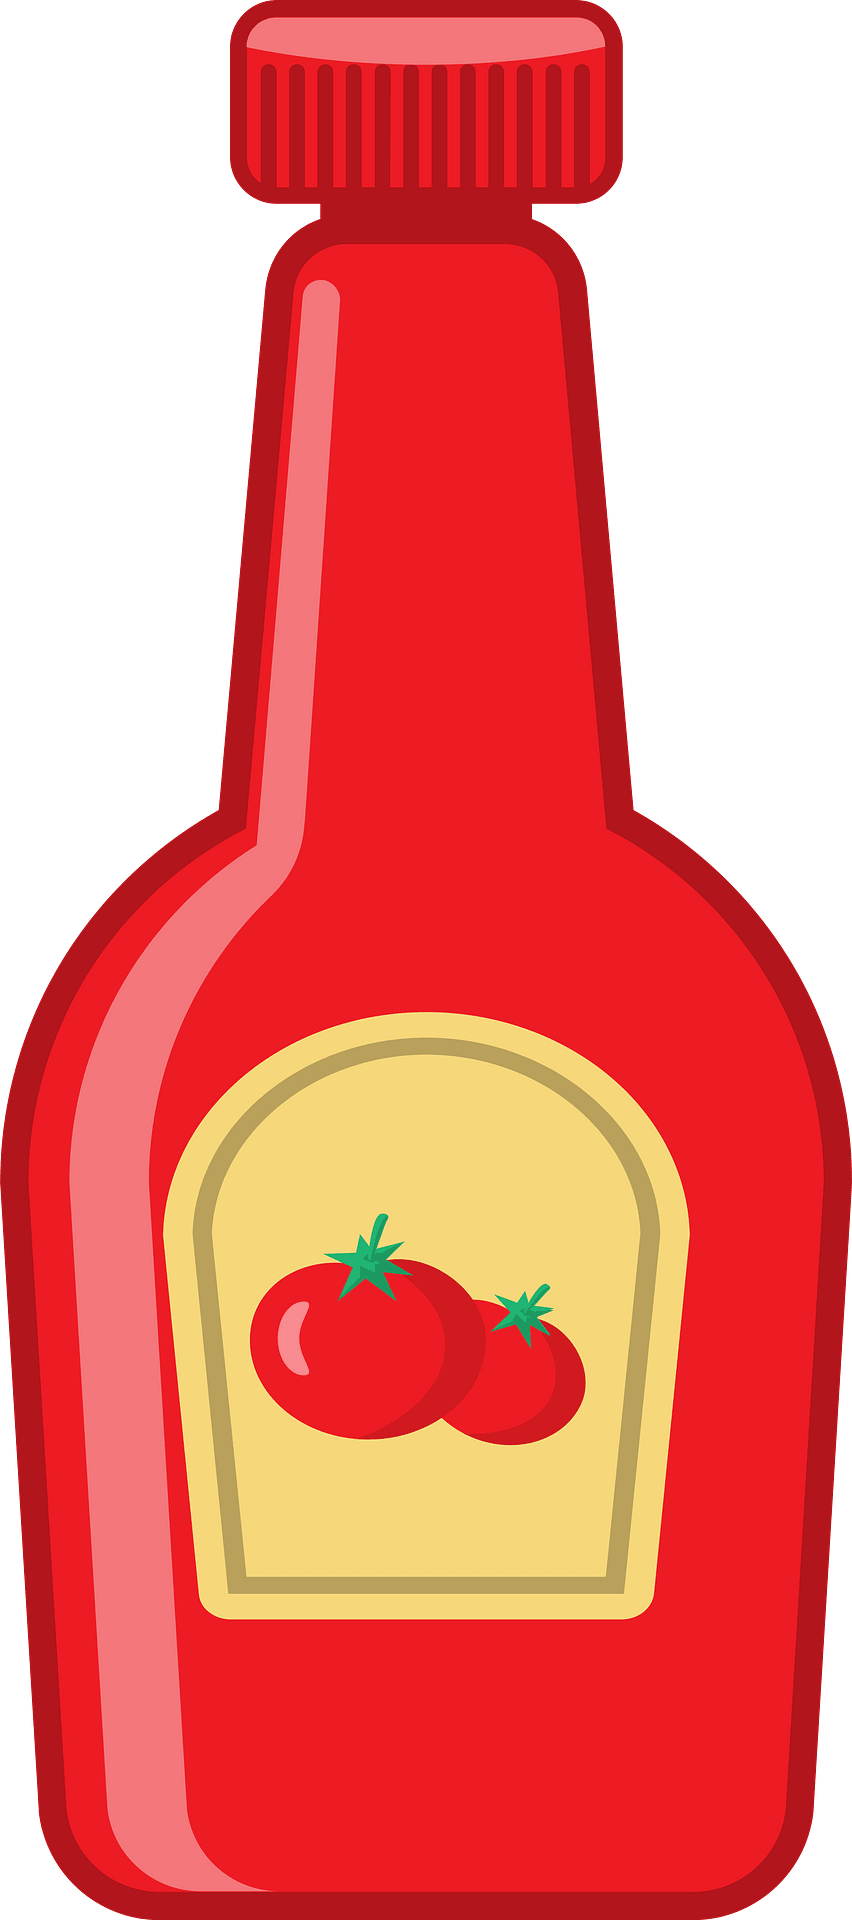 Ketchup Bottle Clip Art At Clker Com Vector Clip Art Online Clip Art Library